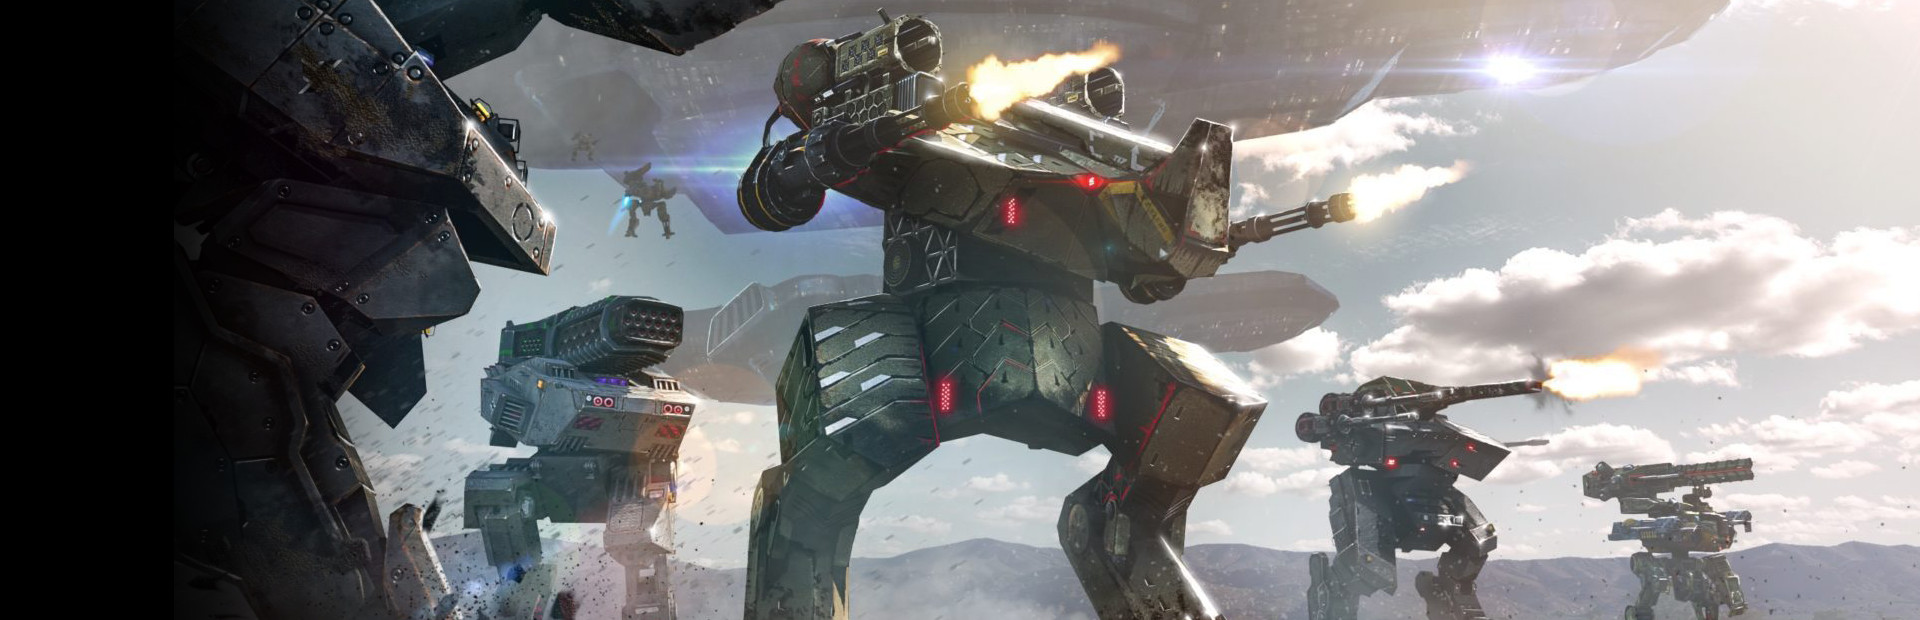 War Robots cover image